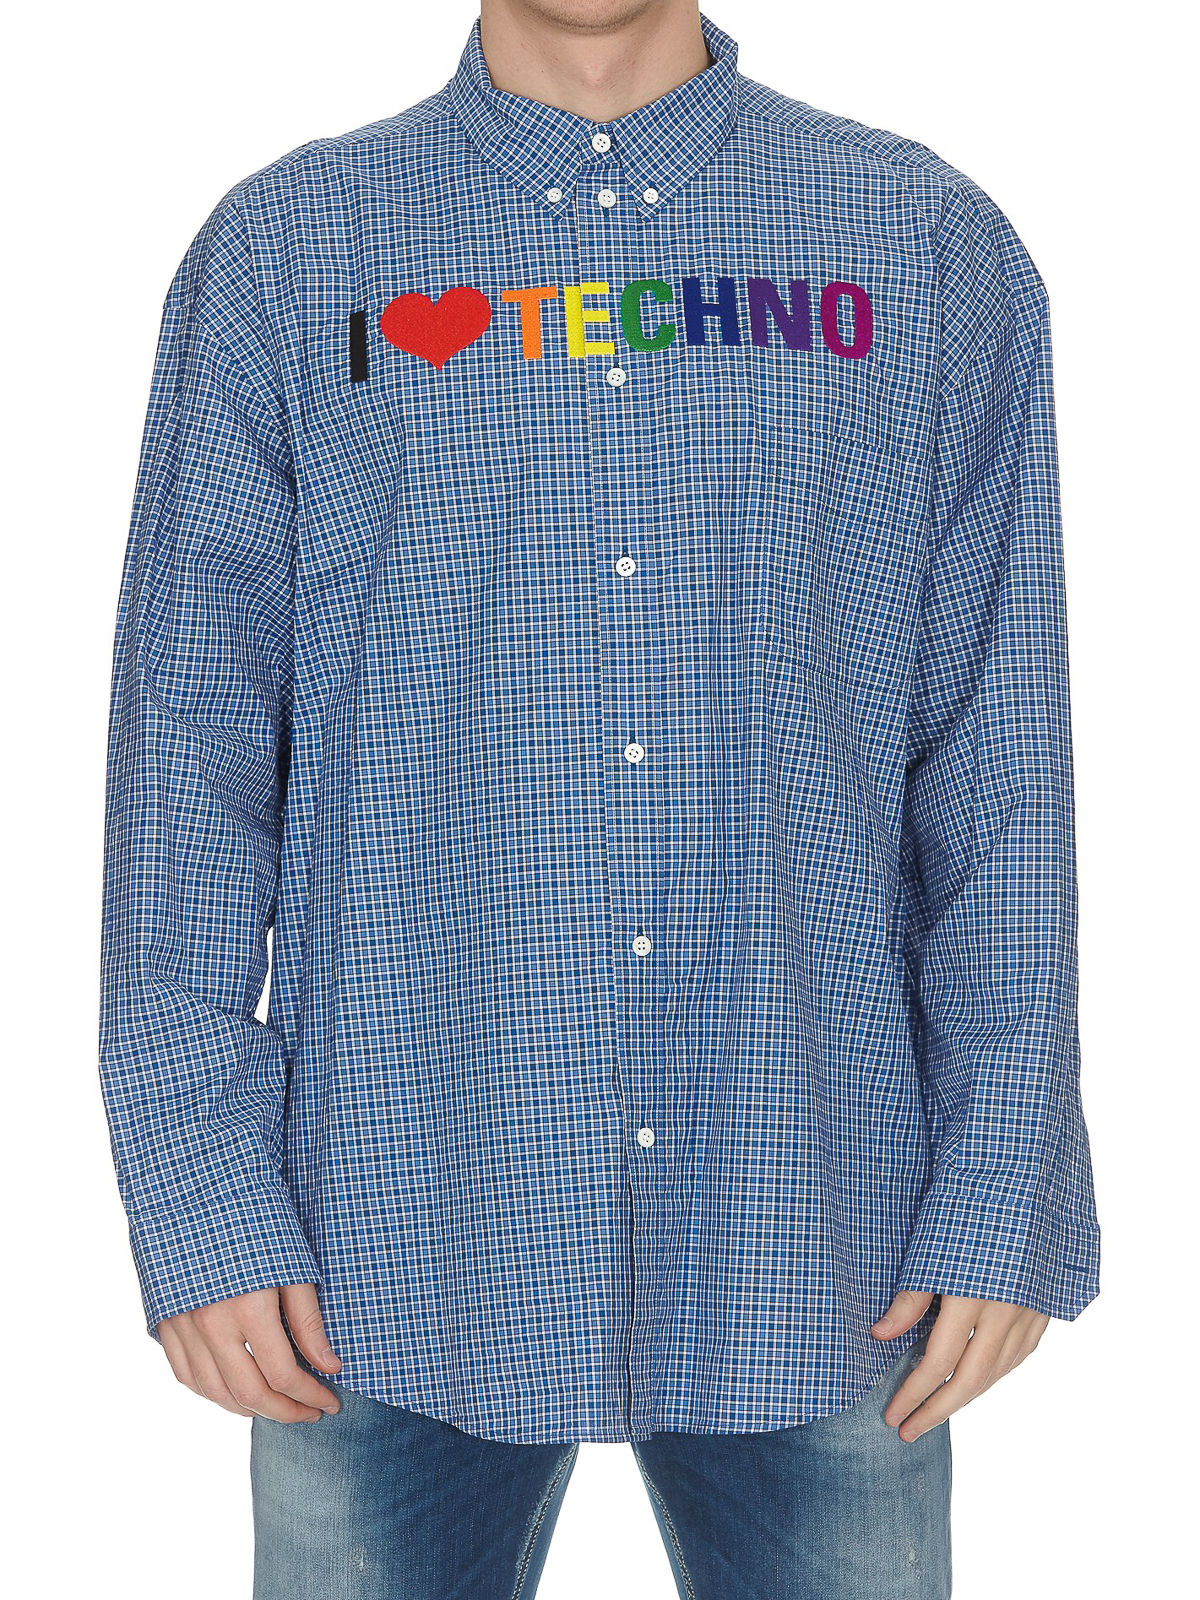 Techno embroidery check shirt - shirts 